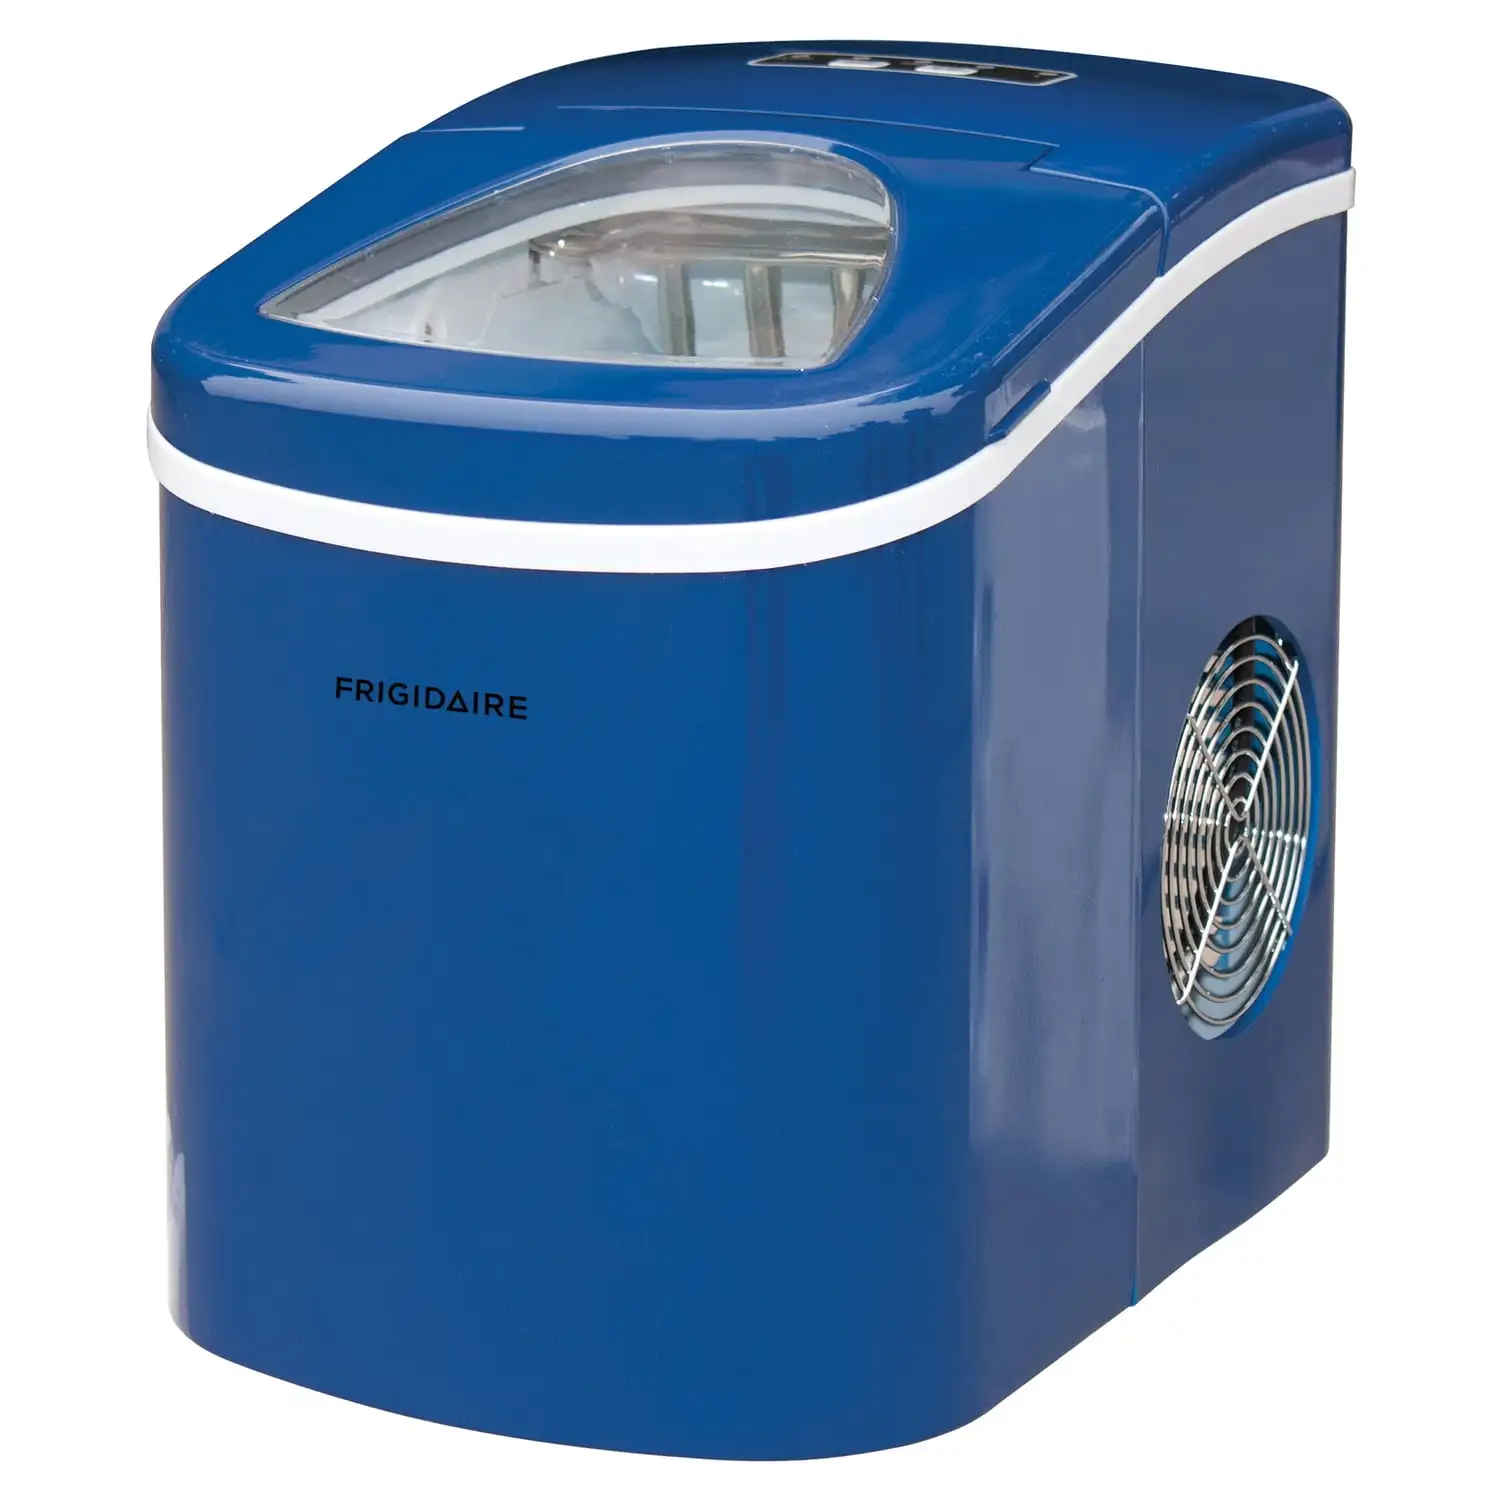 

Frigidaire 26lb. Portable Countertop Ice maker, Blue, EFIC108